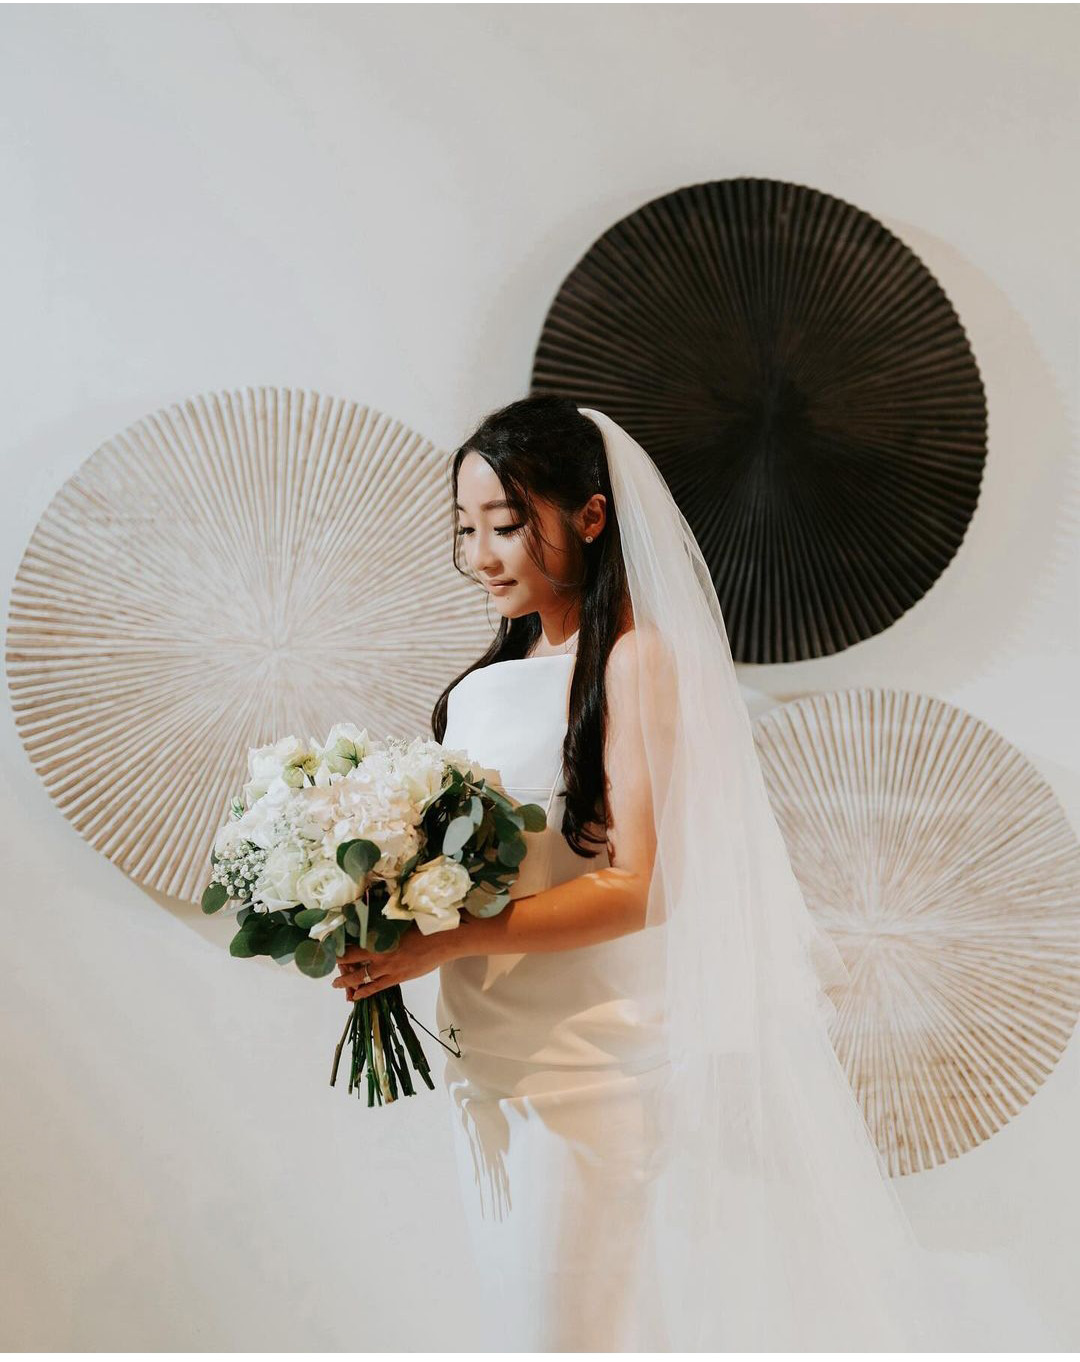 Tony Leung Ka Fai Gets “emotional” At Younger Daughters Wedding To Canadian Beau Today 